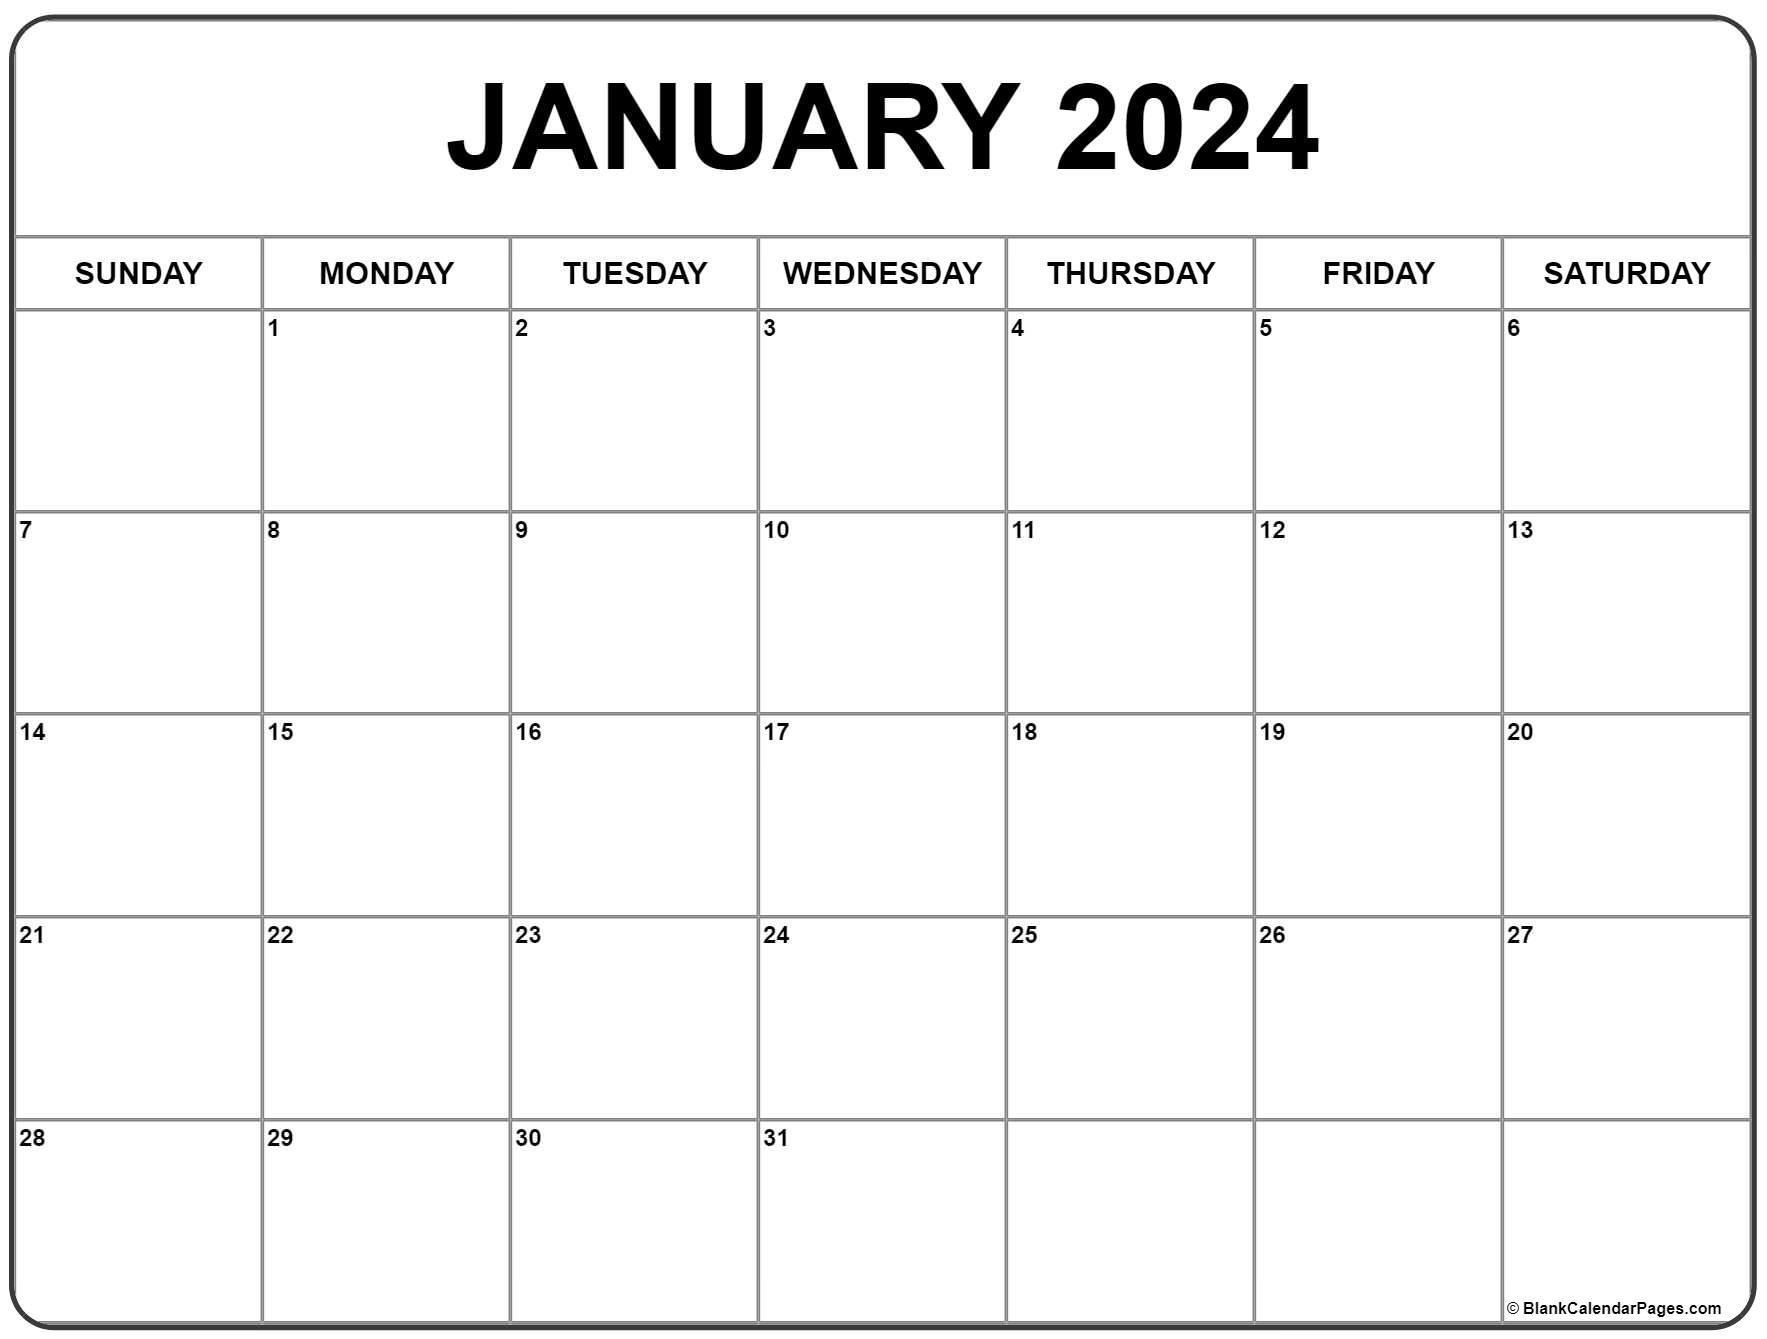 January 2024 Calendar | Free Printable Calendar | January Printable Calendar 2024